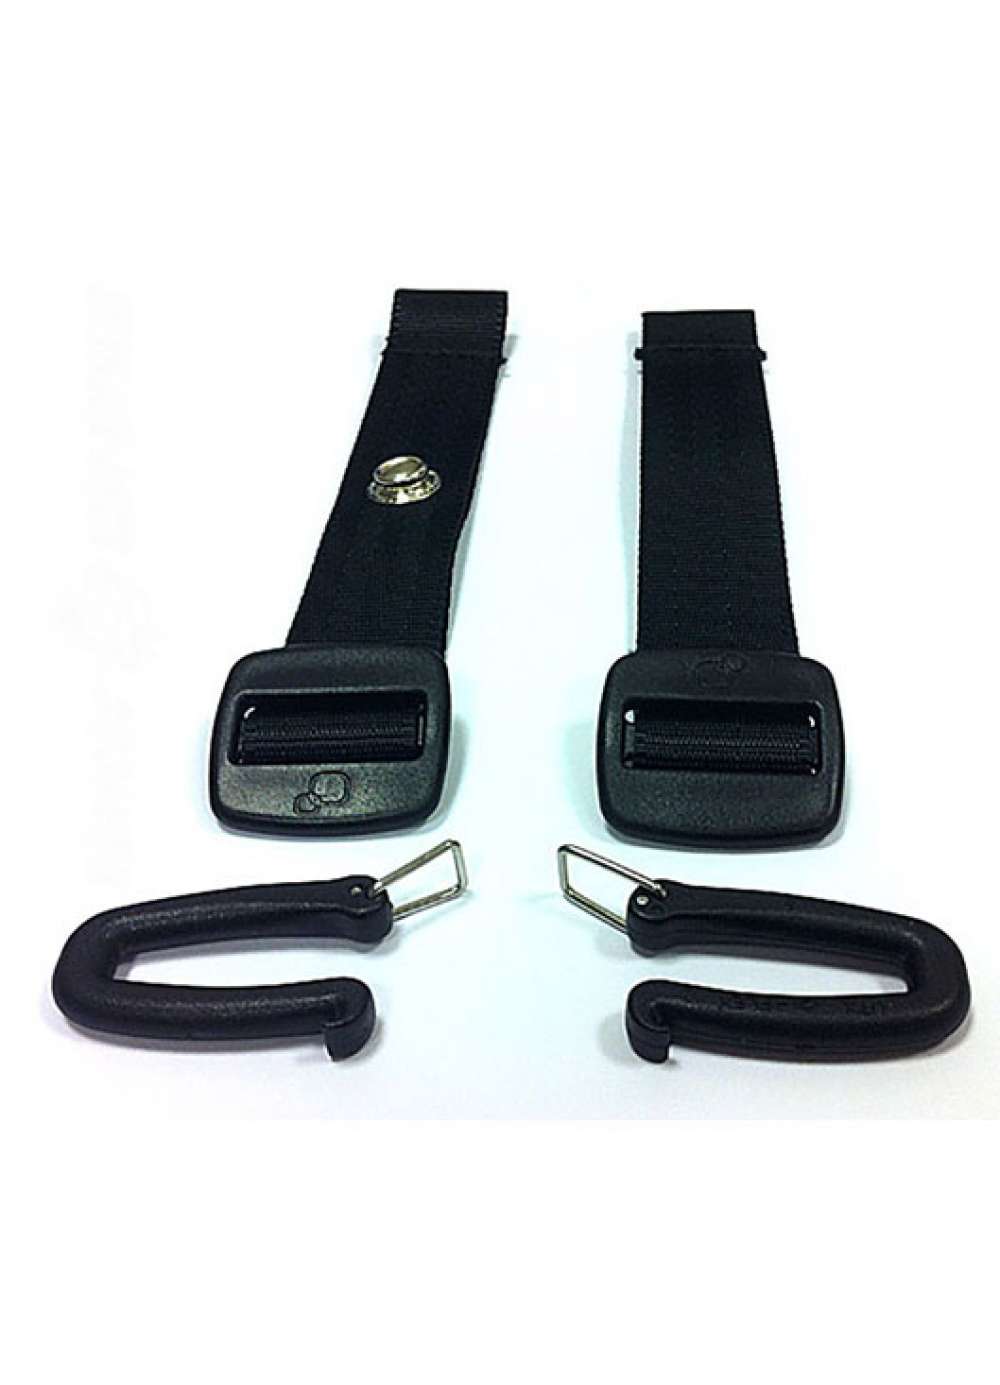 Shoulder Harness/Strap/Belt for Seat Unit fits Quinny Buzz/ Zapp/ Zapp Xtra 